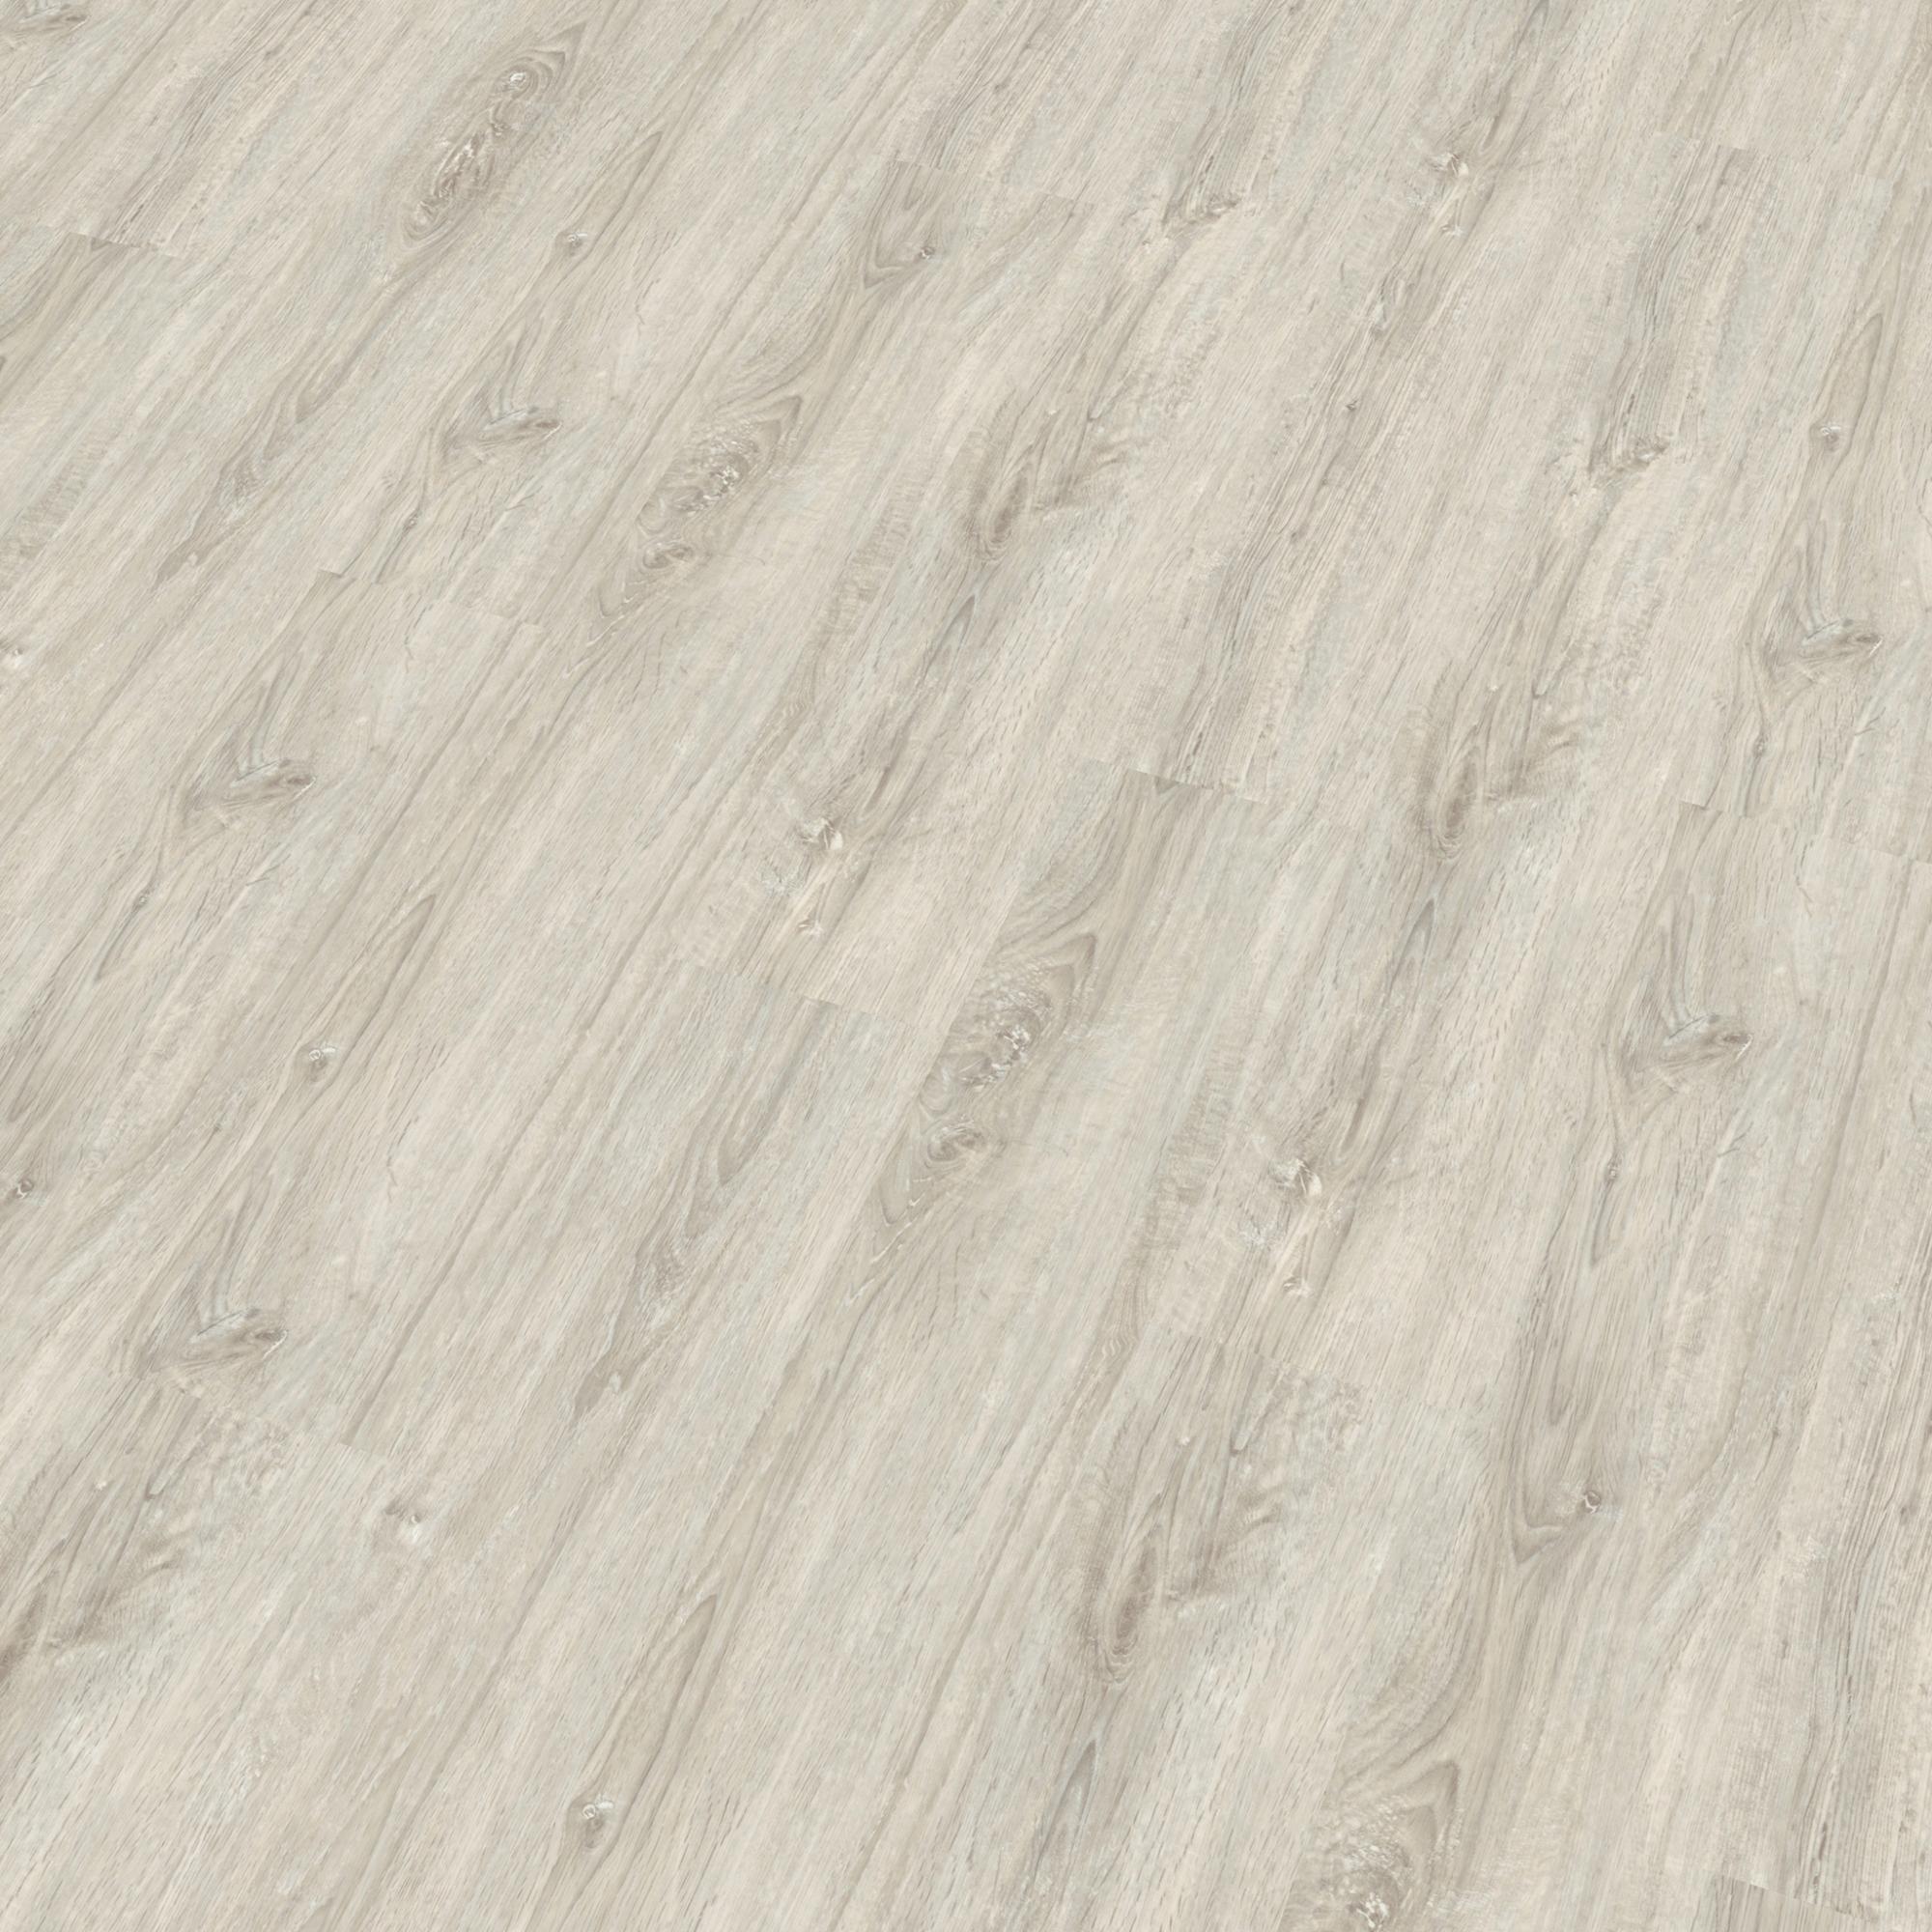 HINTERSEER - Eeterna LVT Start Frozen Oak, HDF deska, korková podložka (2,03 m²)